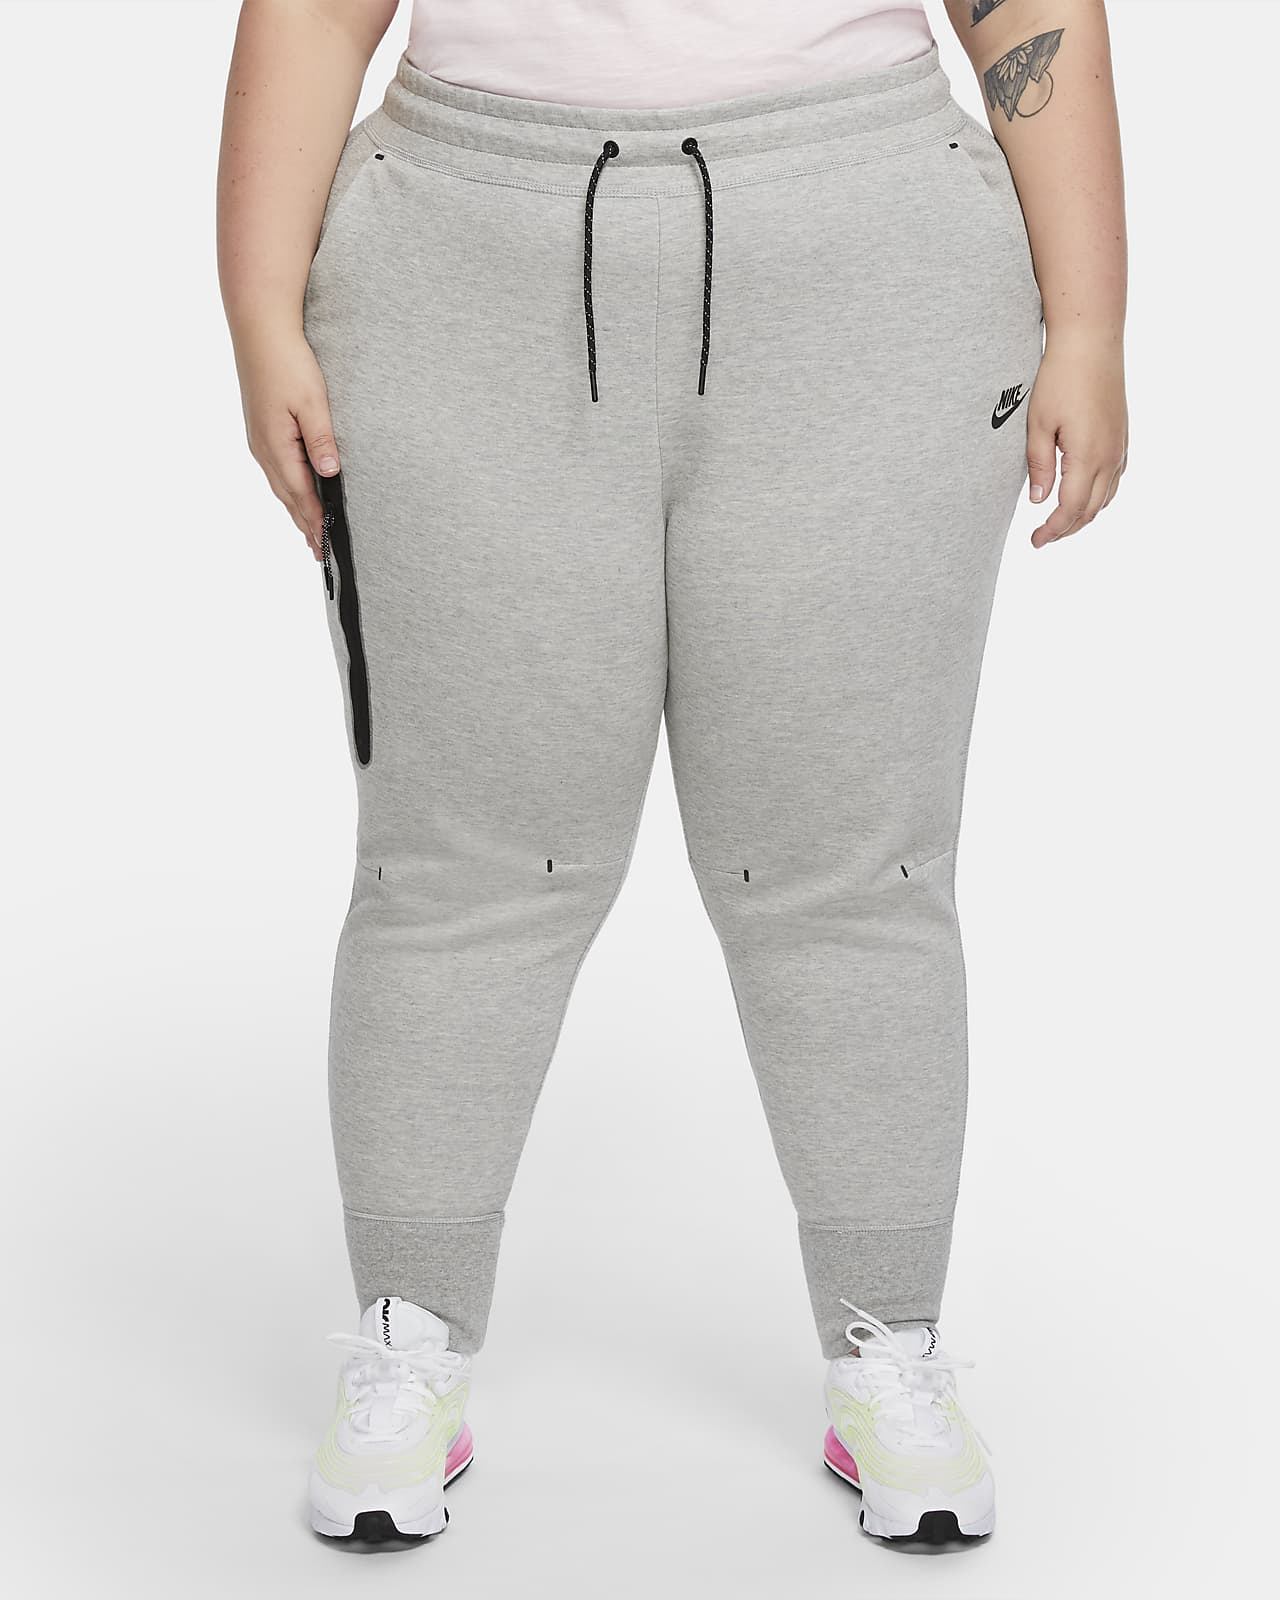 Pantalon Nike Sportswear Tech Fleece pour Femme (grande taille)